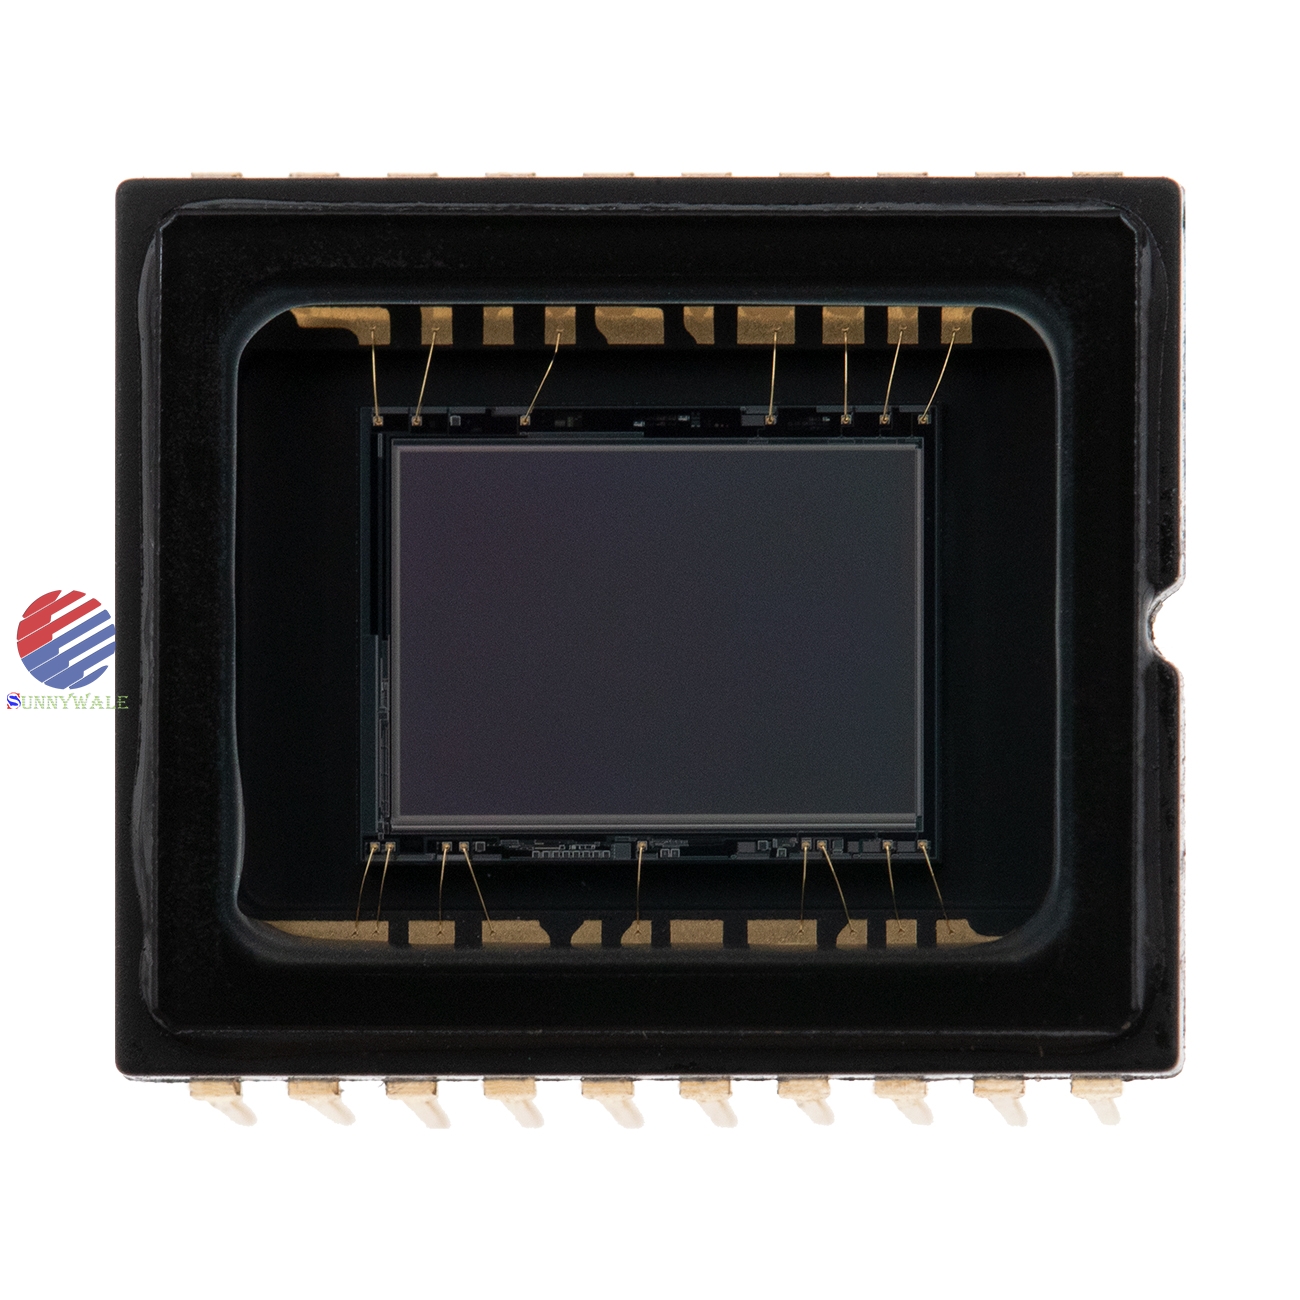 ICX267AL, SONY 1.5MP analog  image SENSOR, 1434×1050 pixels, diagonal 8mm(type 1/2), progressive scanning CCD, analog video output, B/W, black and white, monochrome, industrial camera image sensor